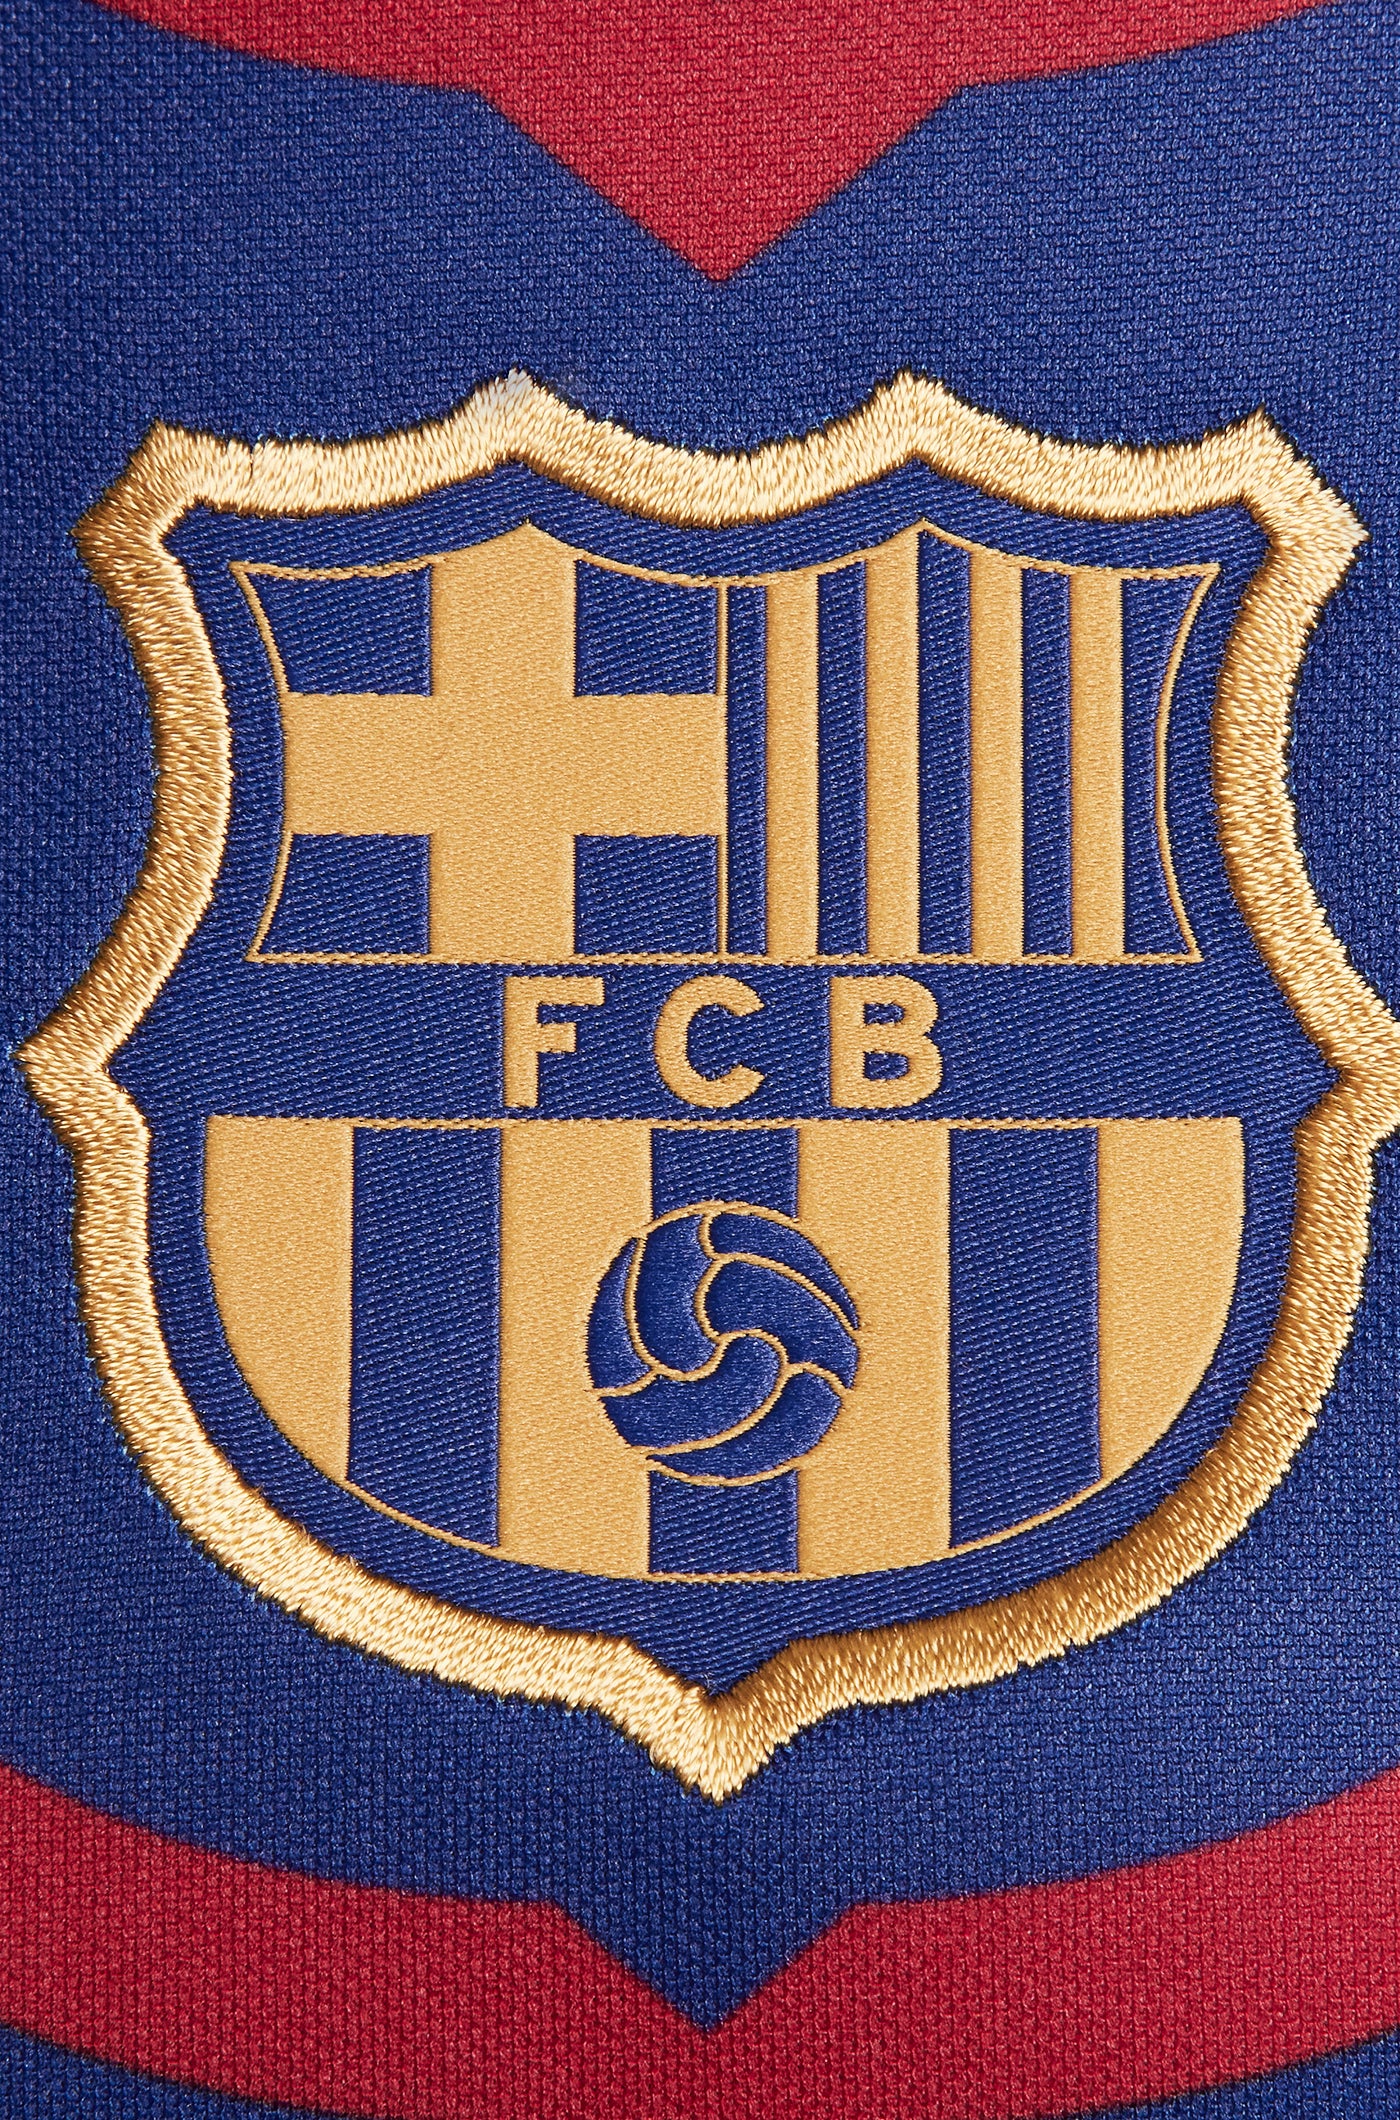 FC Barcelona blaugrana Pre-Match Shirt - Women's